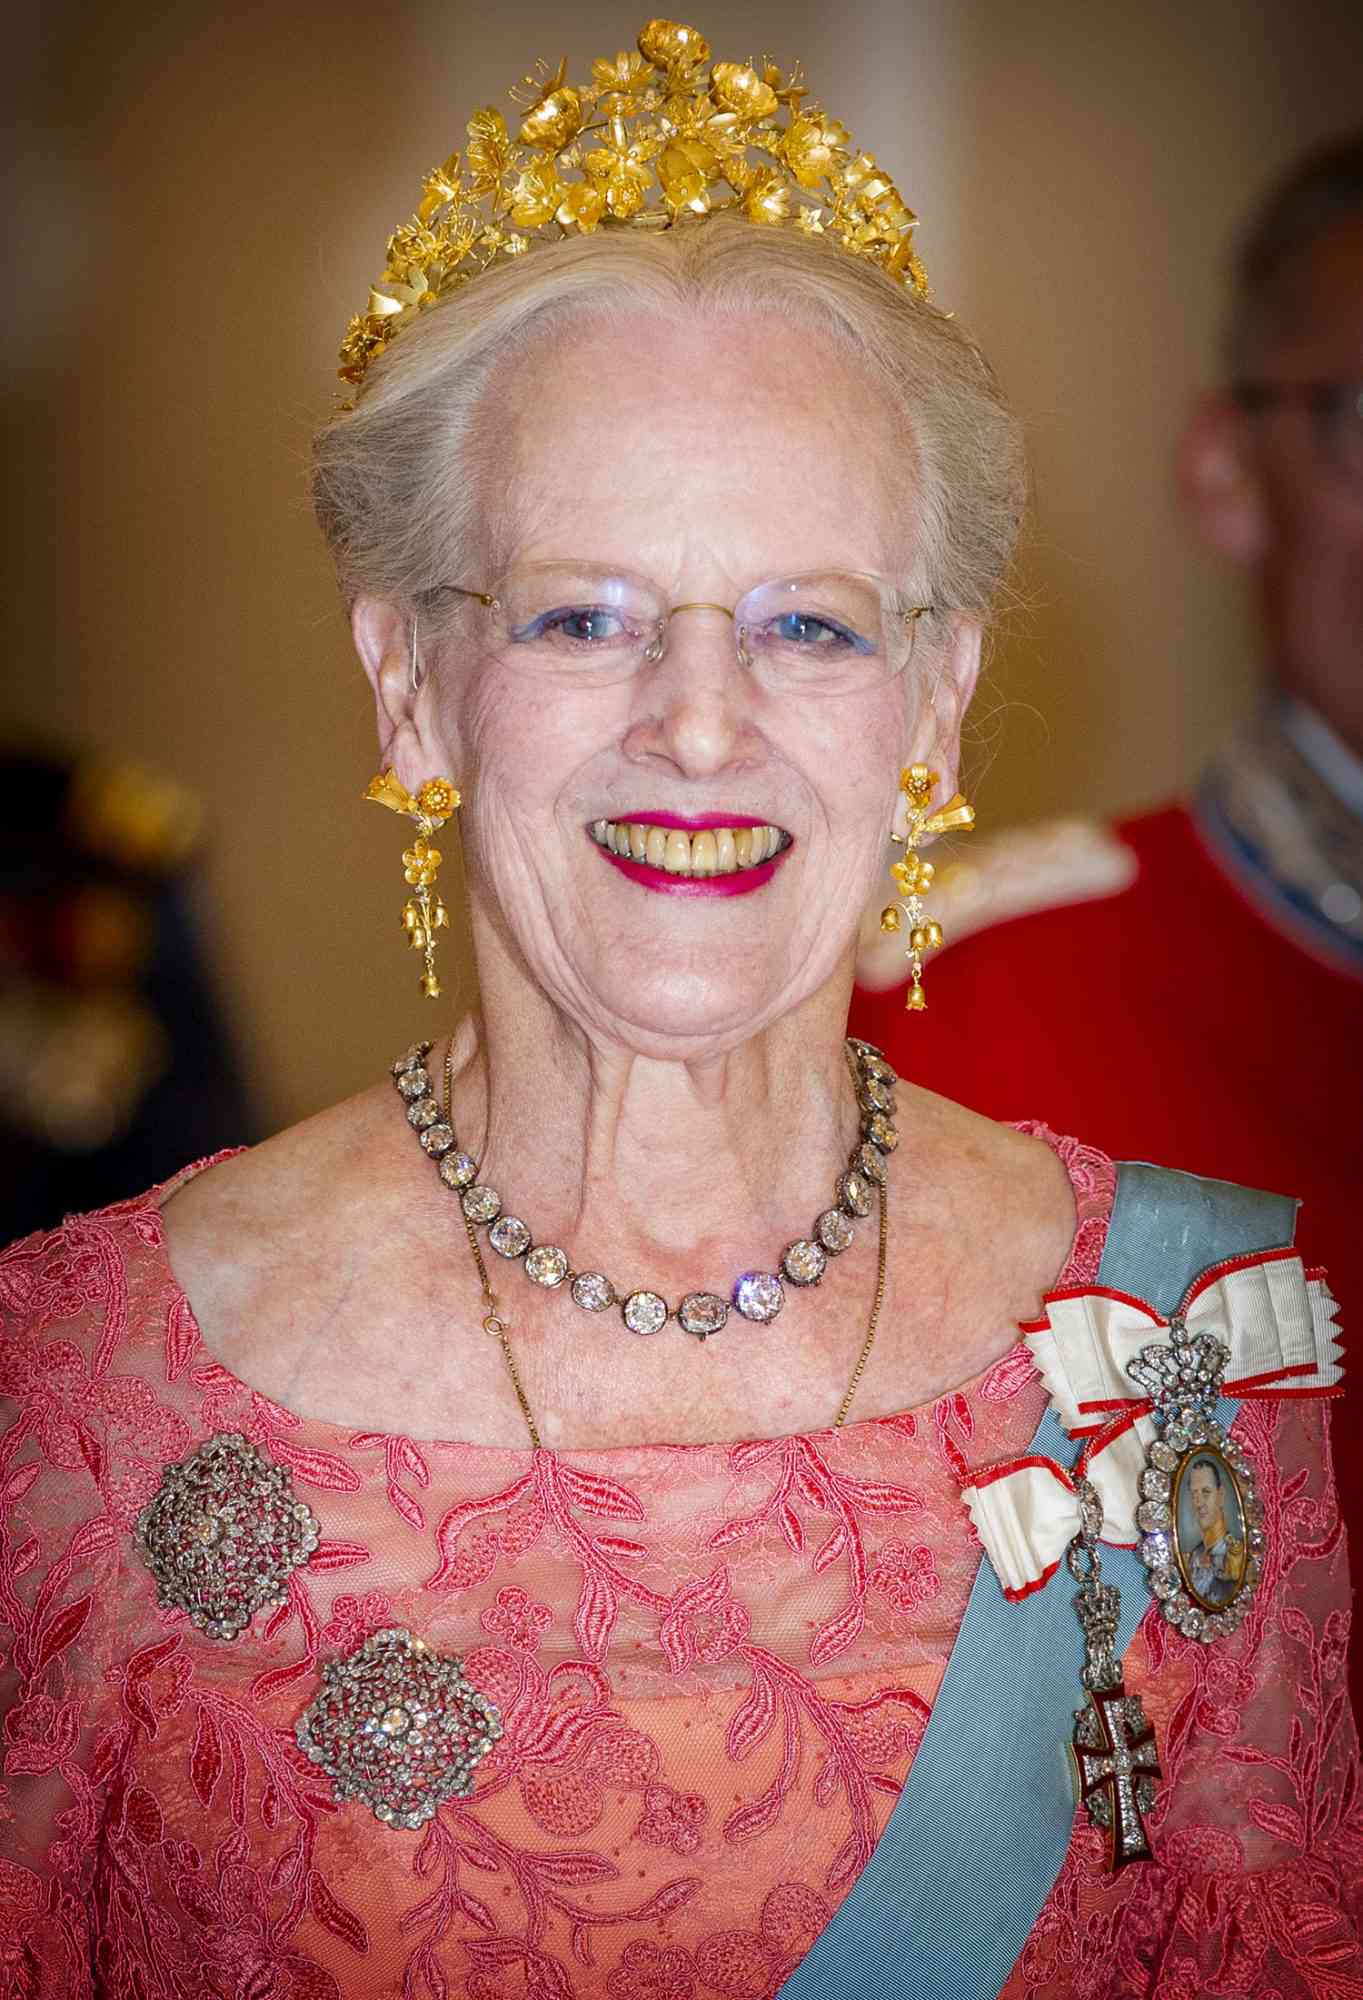 Denmark's Queen Margrethe II